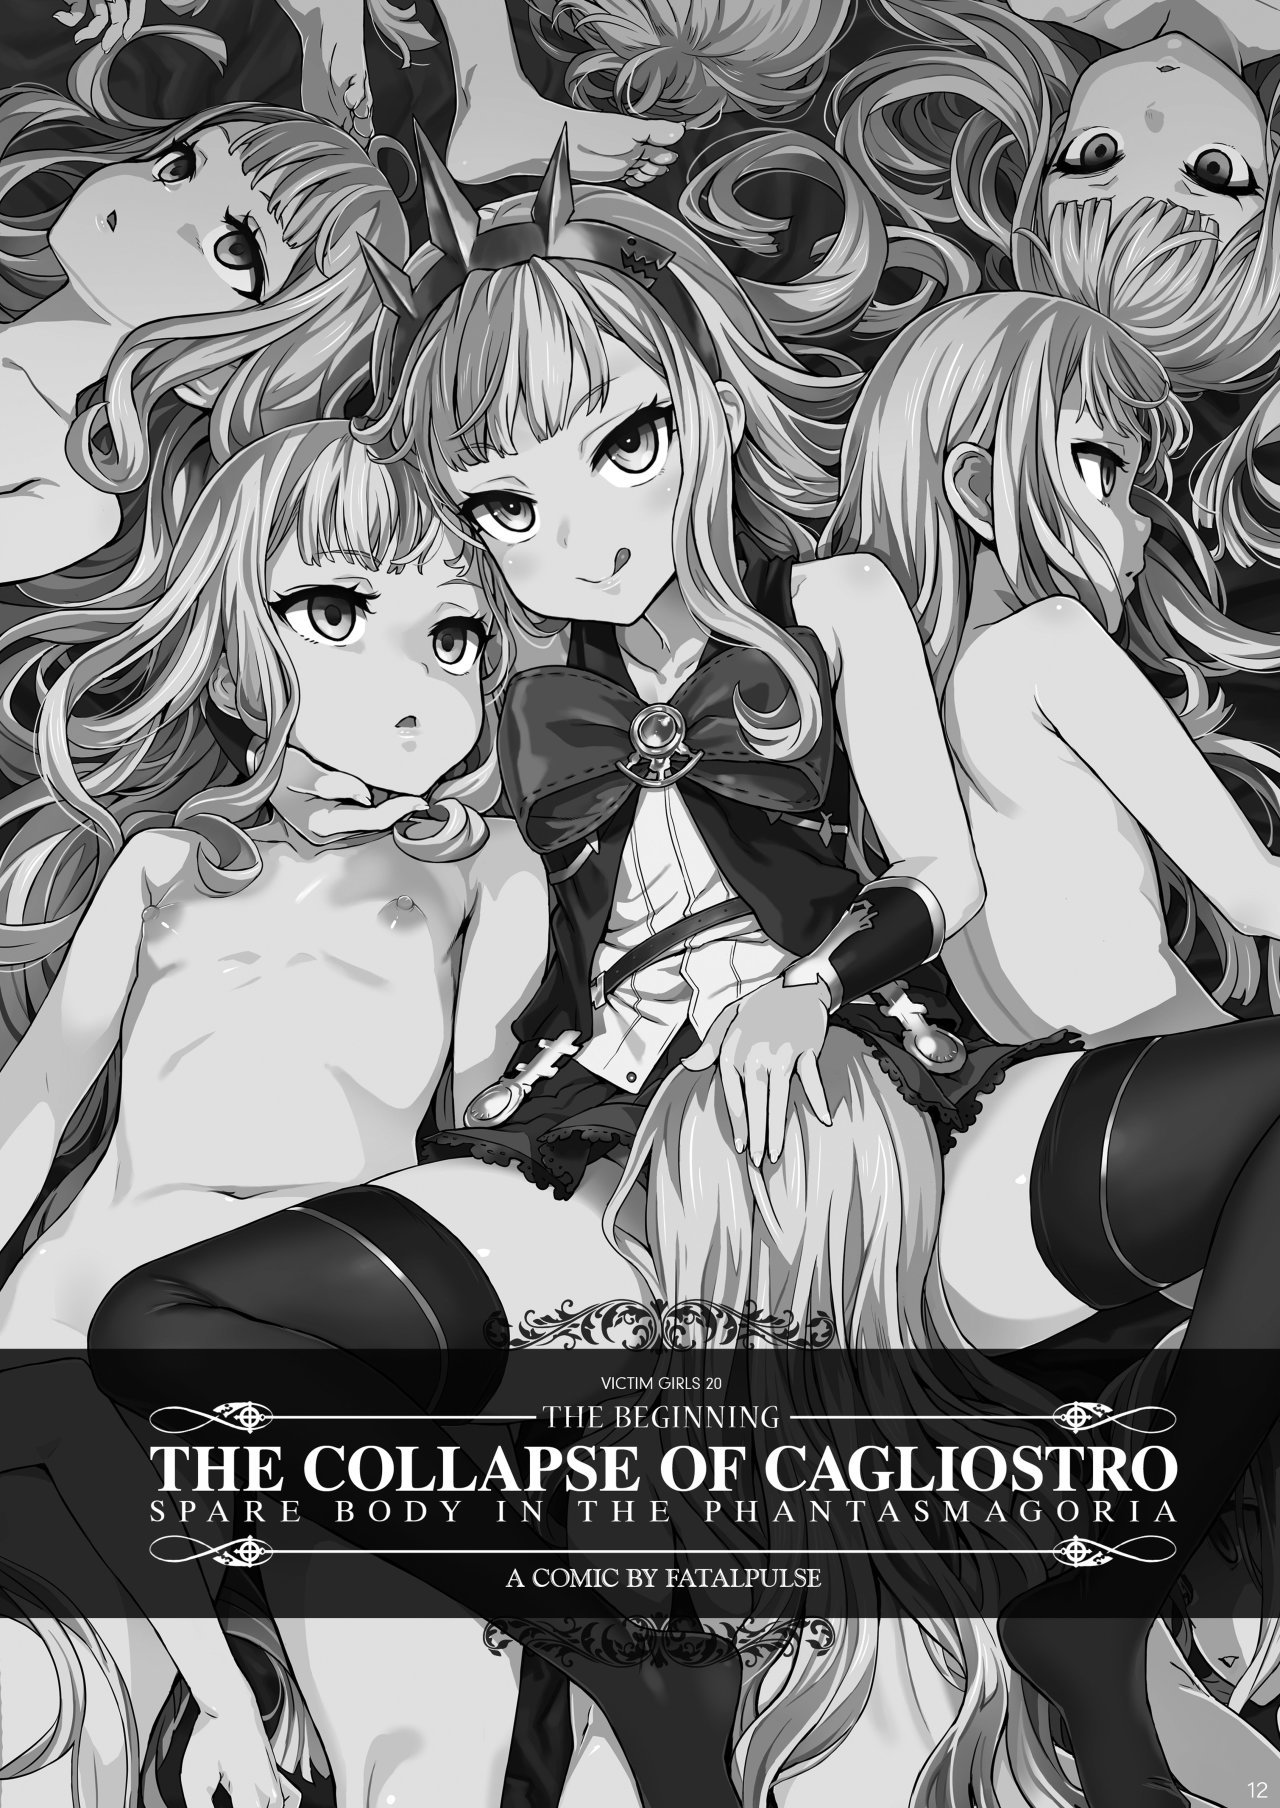 Victim Girls 20 THE COLLAPSE OF CAGLIOSTRO BONUS - 1